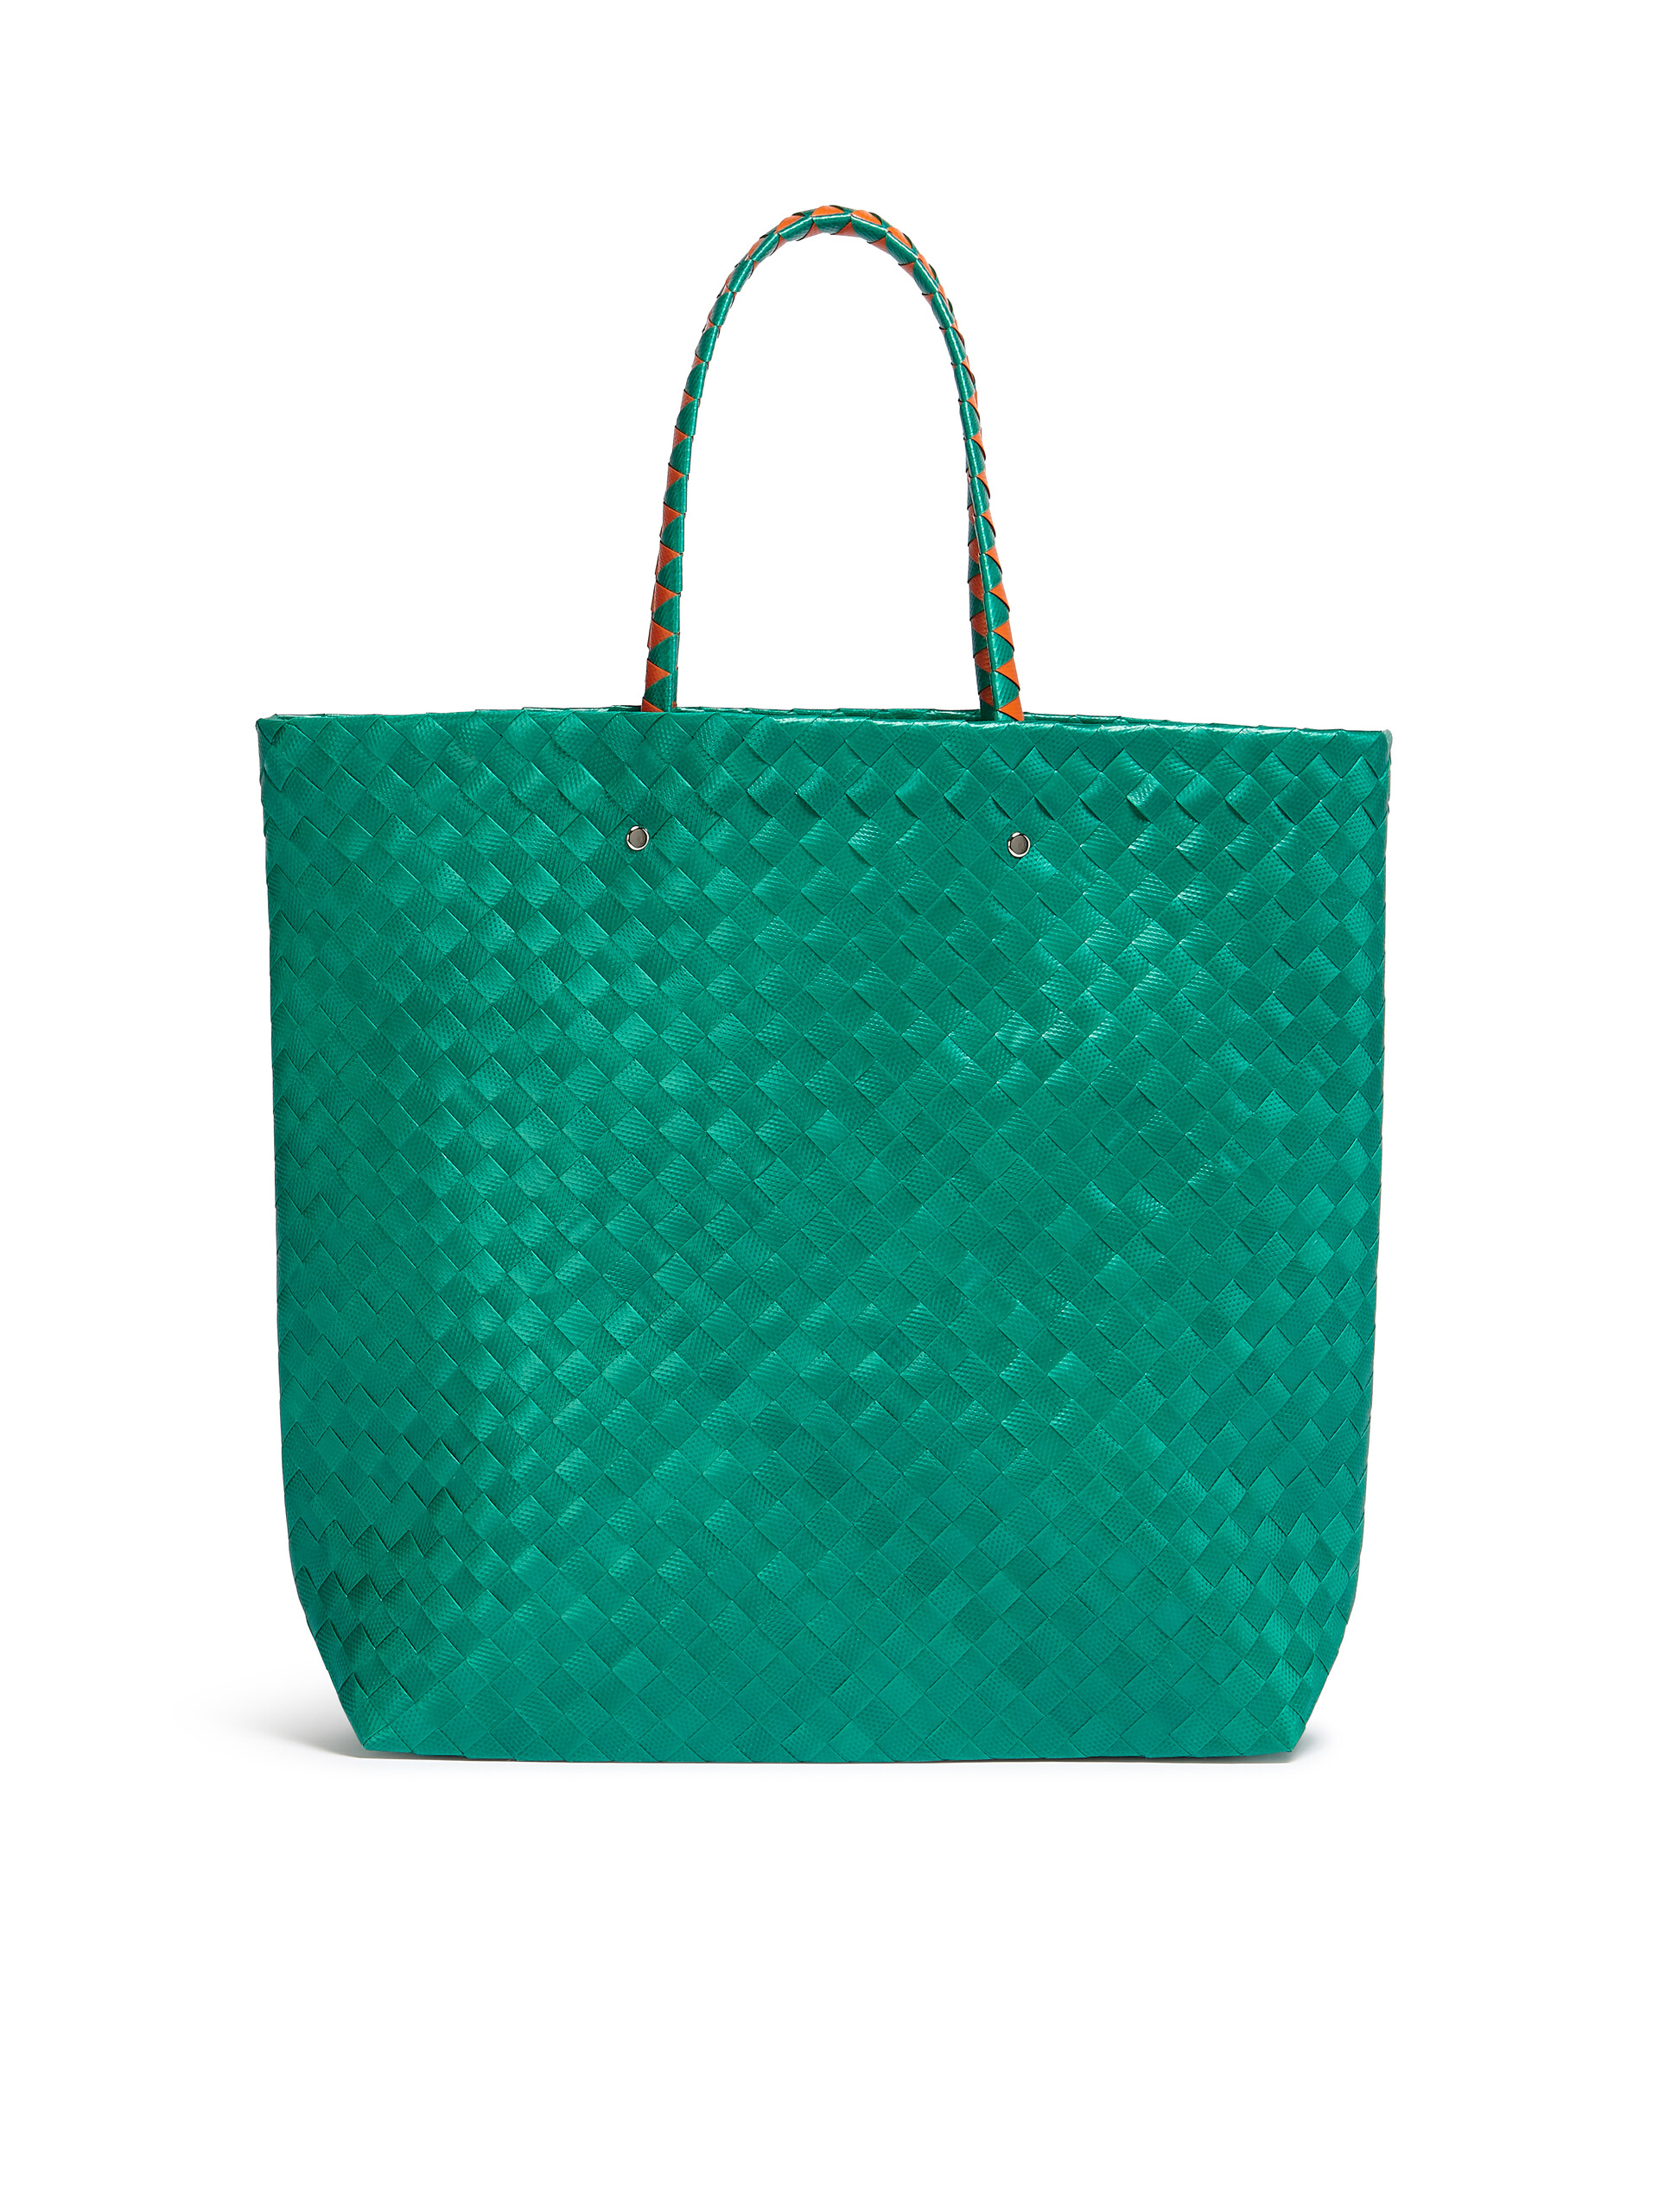 MARNI MARKET medium bag in green flower motif - Bags - Image 3